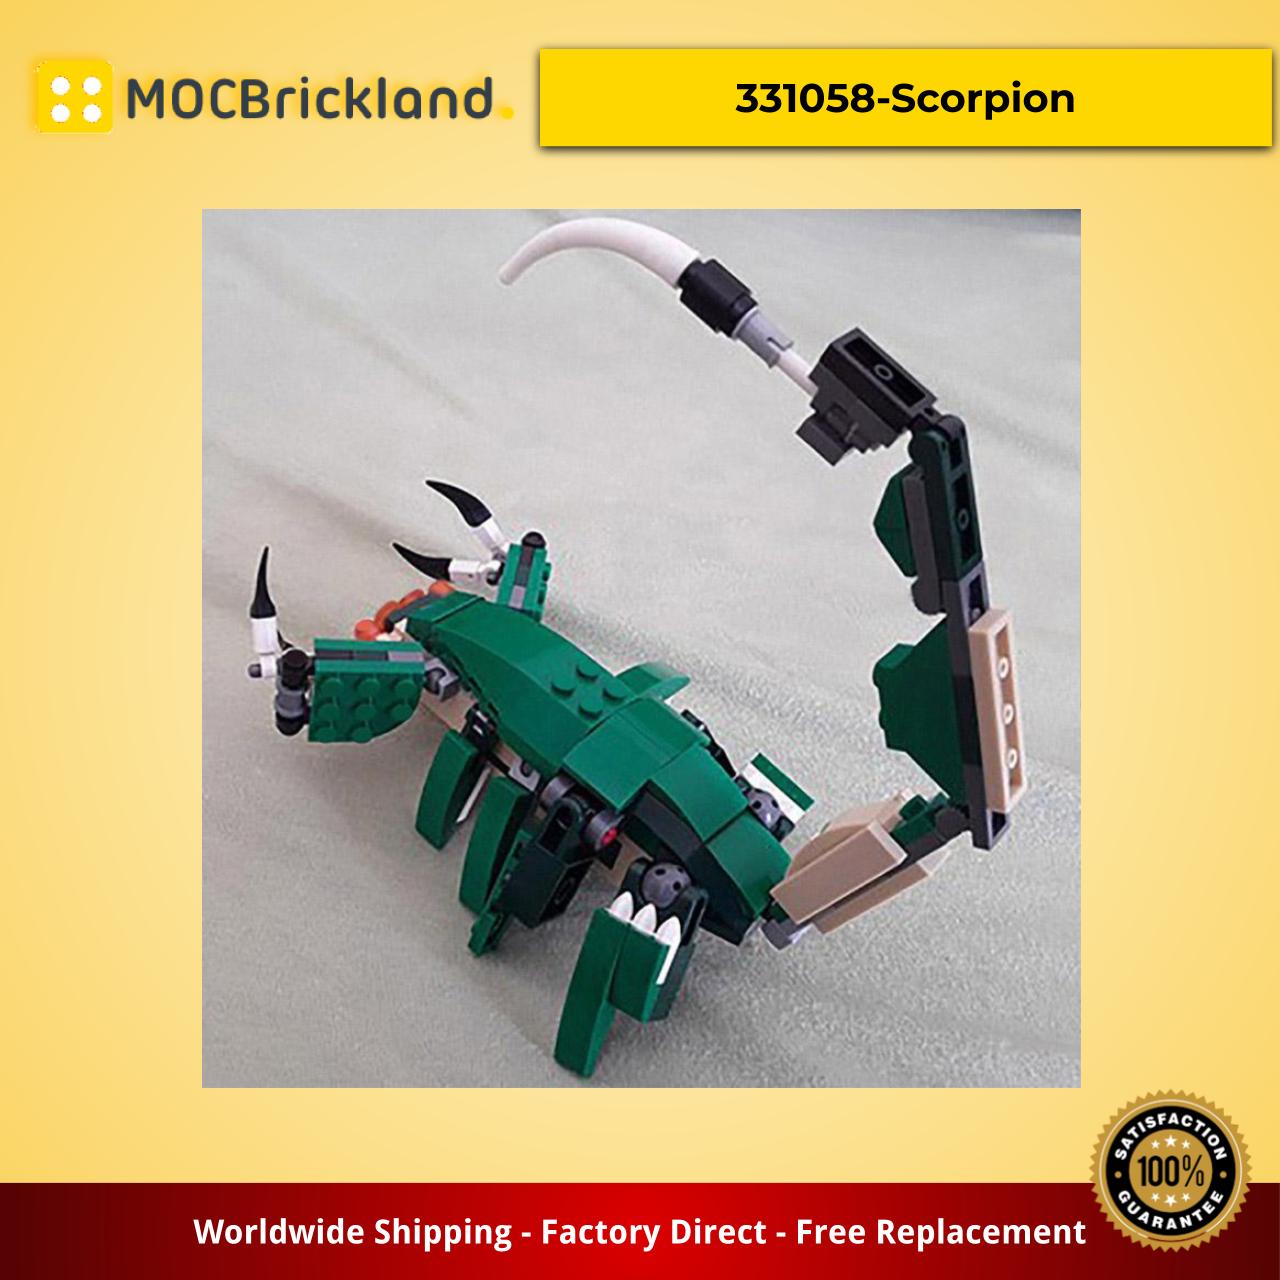 MOCBRICKLAND MOC-17076 31058-Scorpion